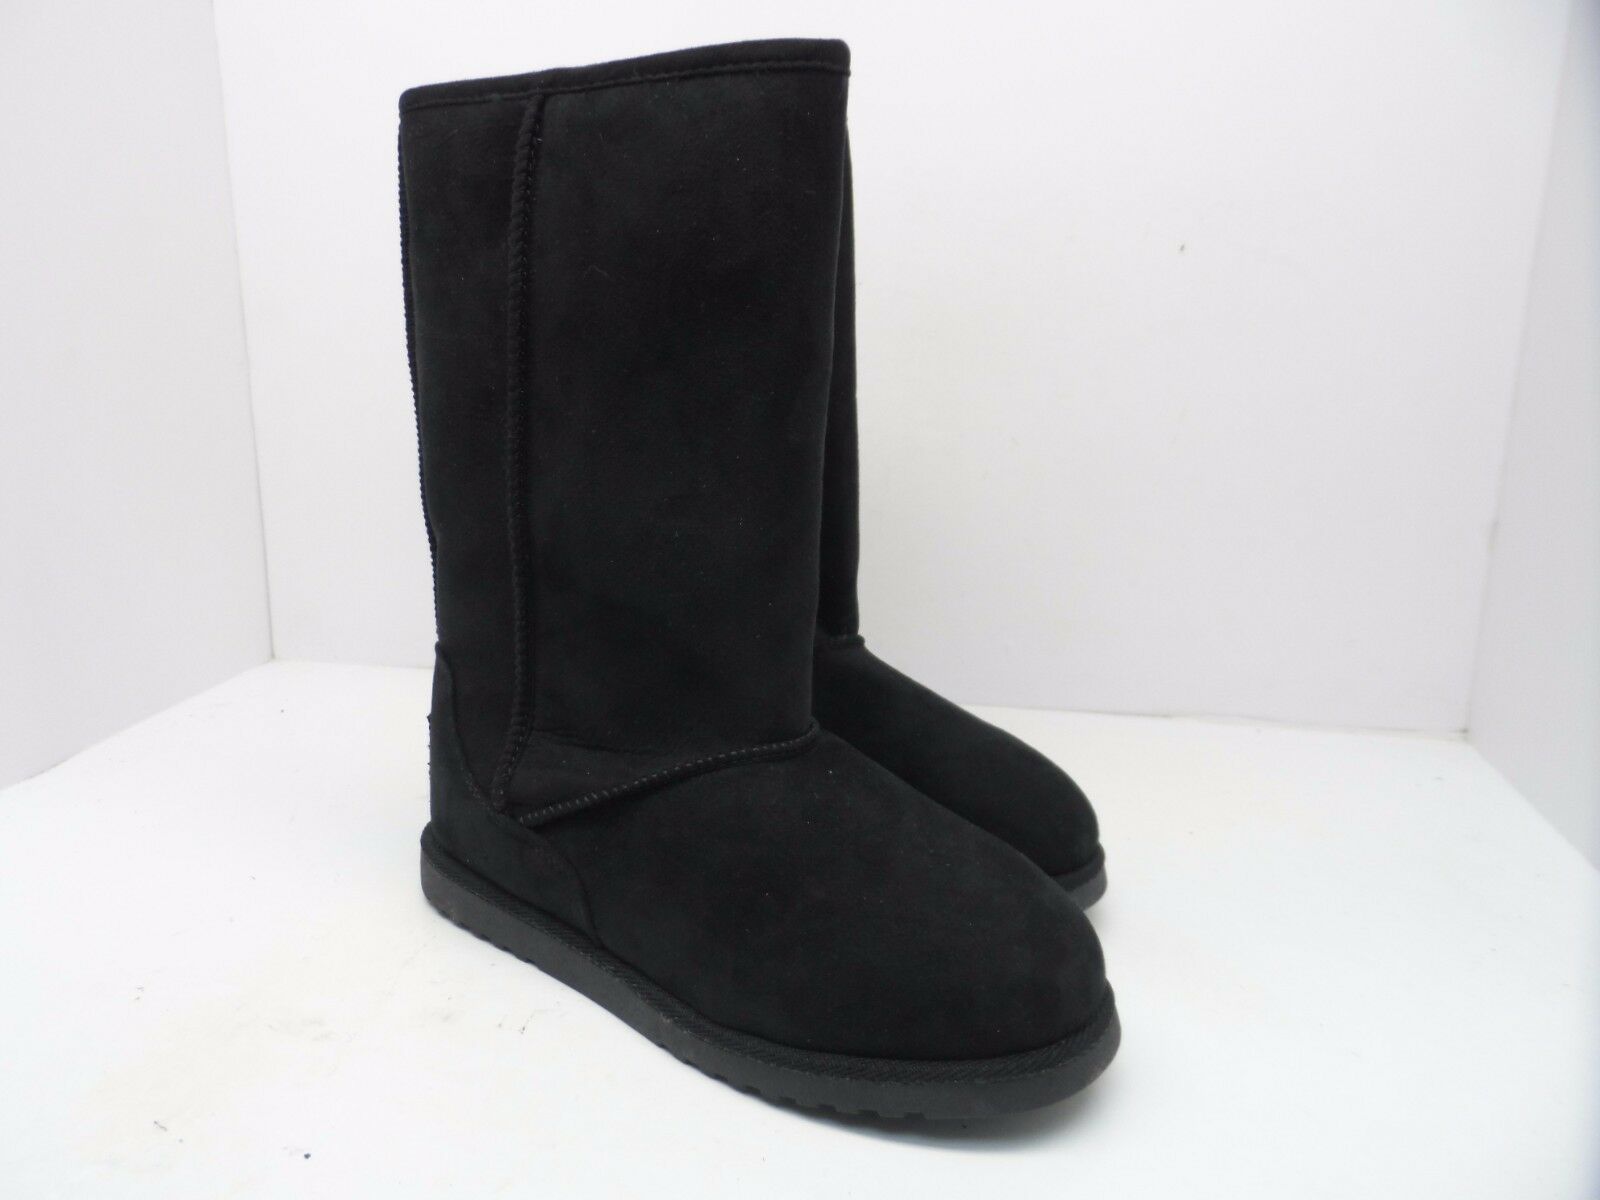 Canyon River Blues Girl's Nola Faux Fur Lined Boots Black Size 5M - $21.37